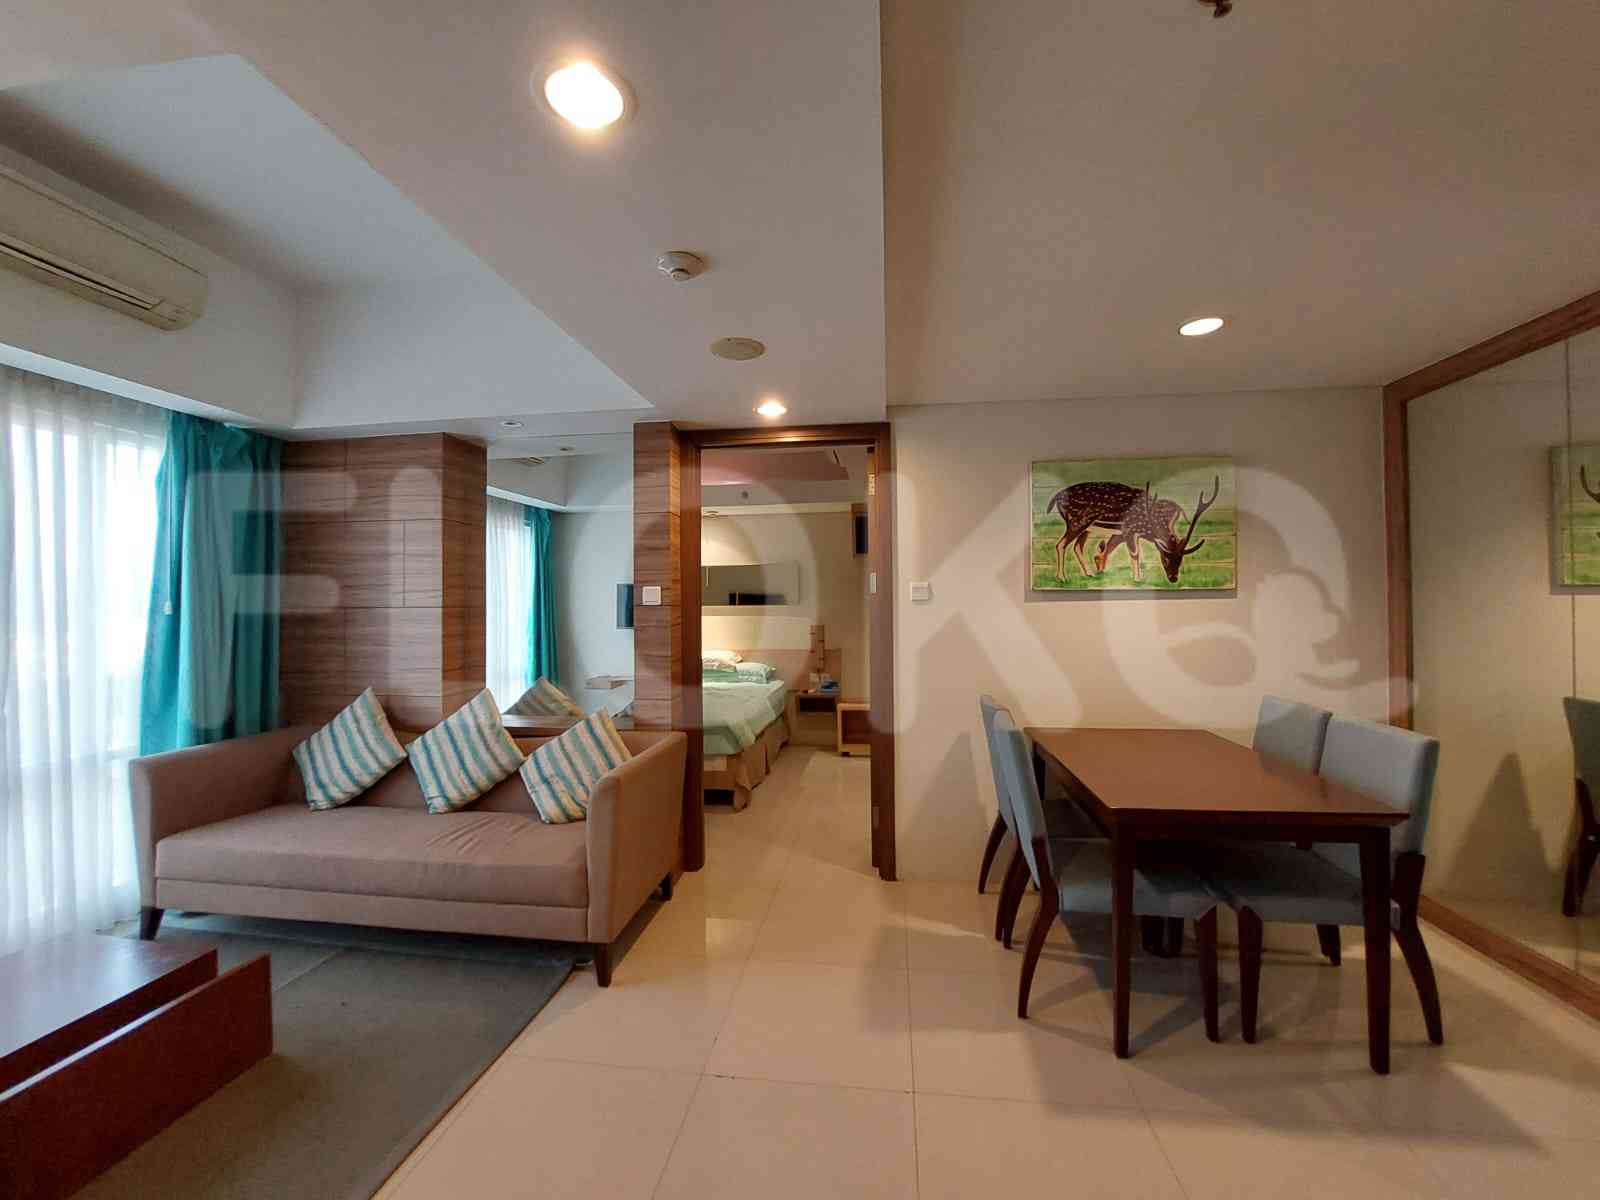 2 Bedroom on 9th Floor for Rent in Bogor Icon - fbo460 8